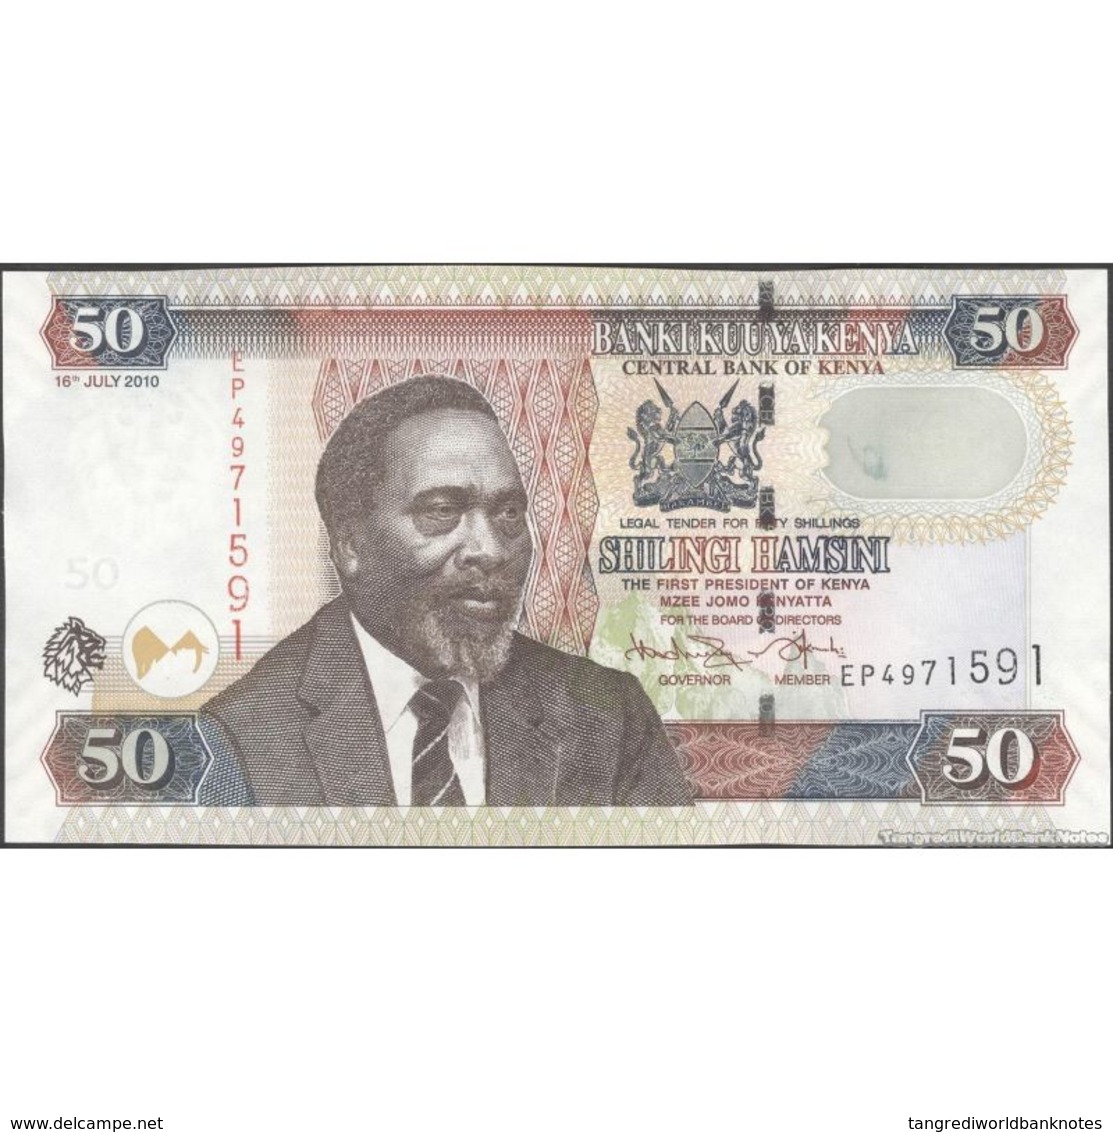 TWN - KENYA 47e - 50 Shillings 16.7.2010 Prefix EP UNC - Kenya